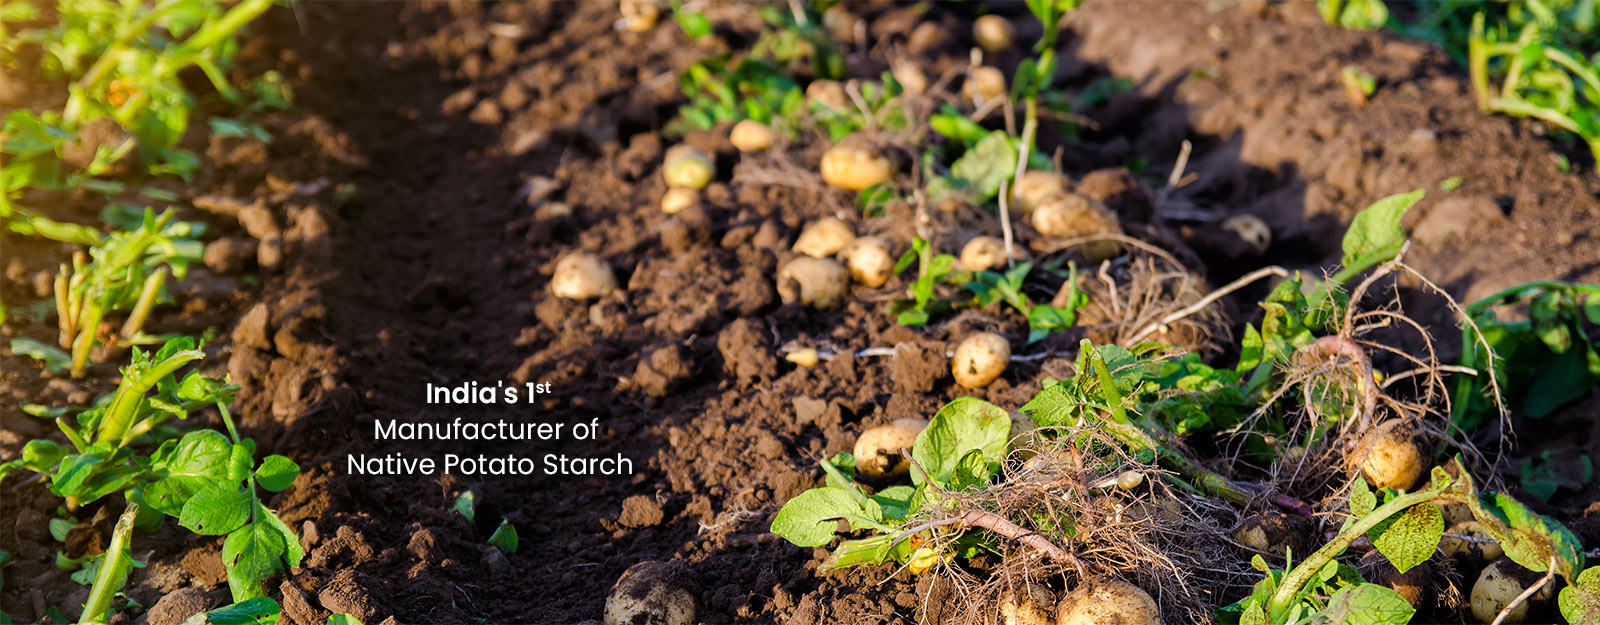 India's 1st manufacturer of native potato starch